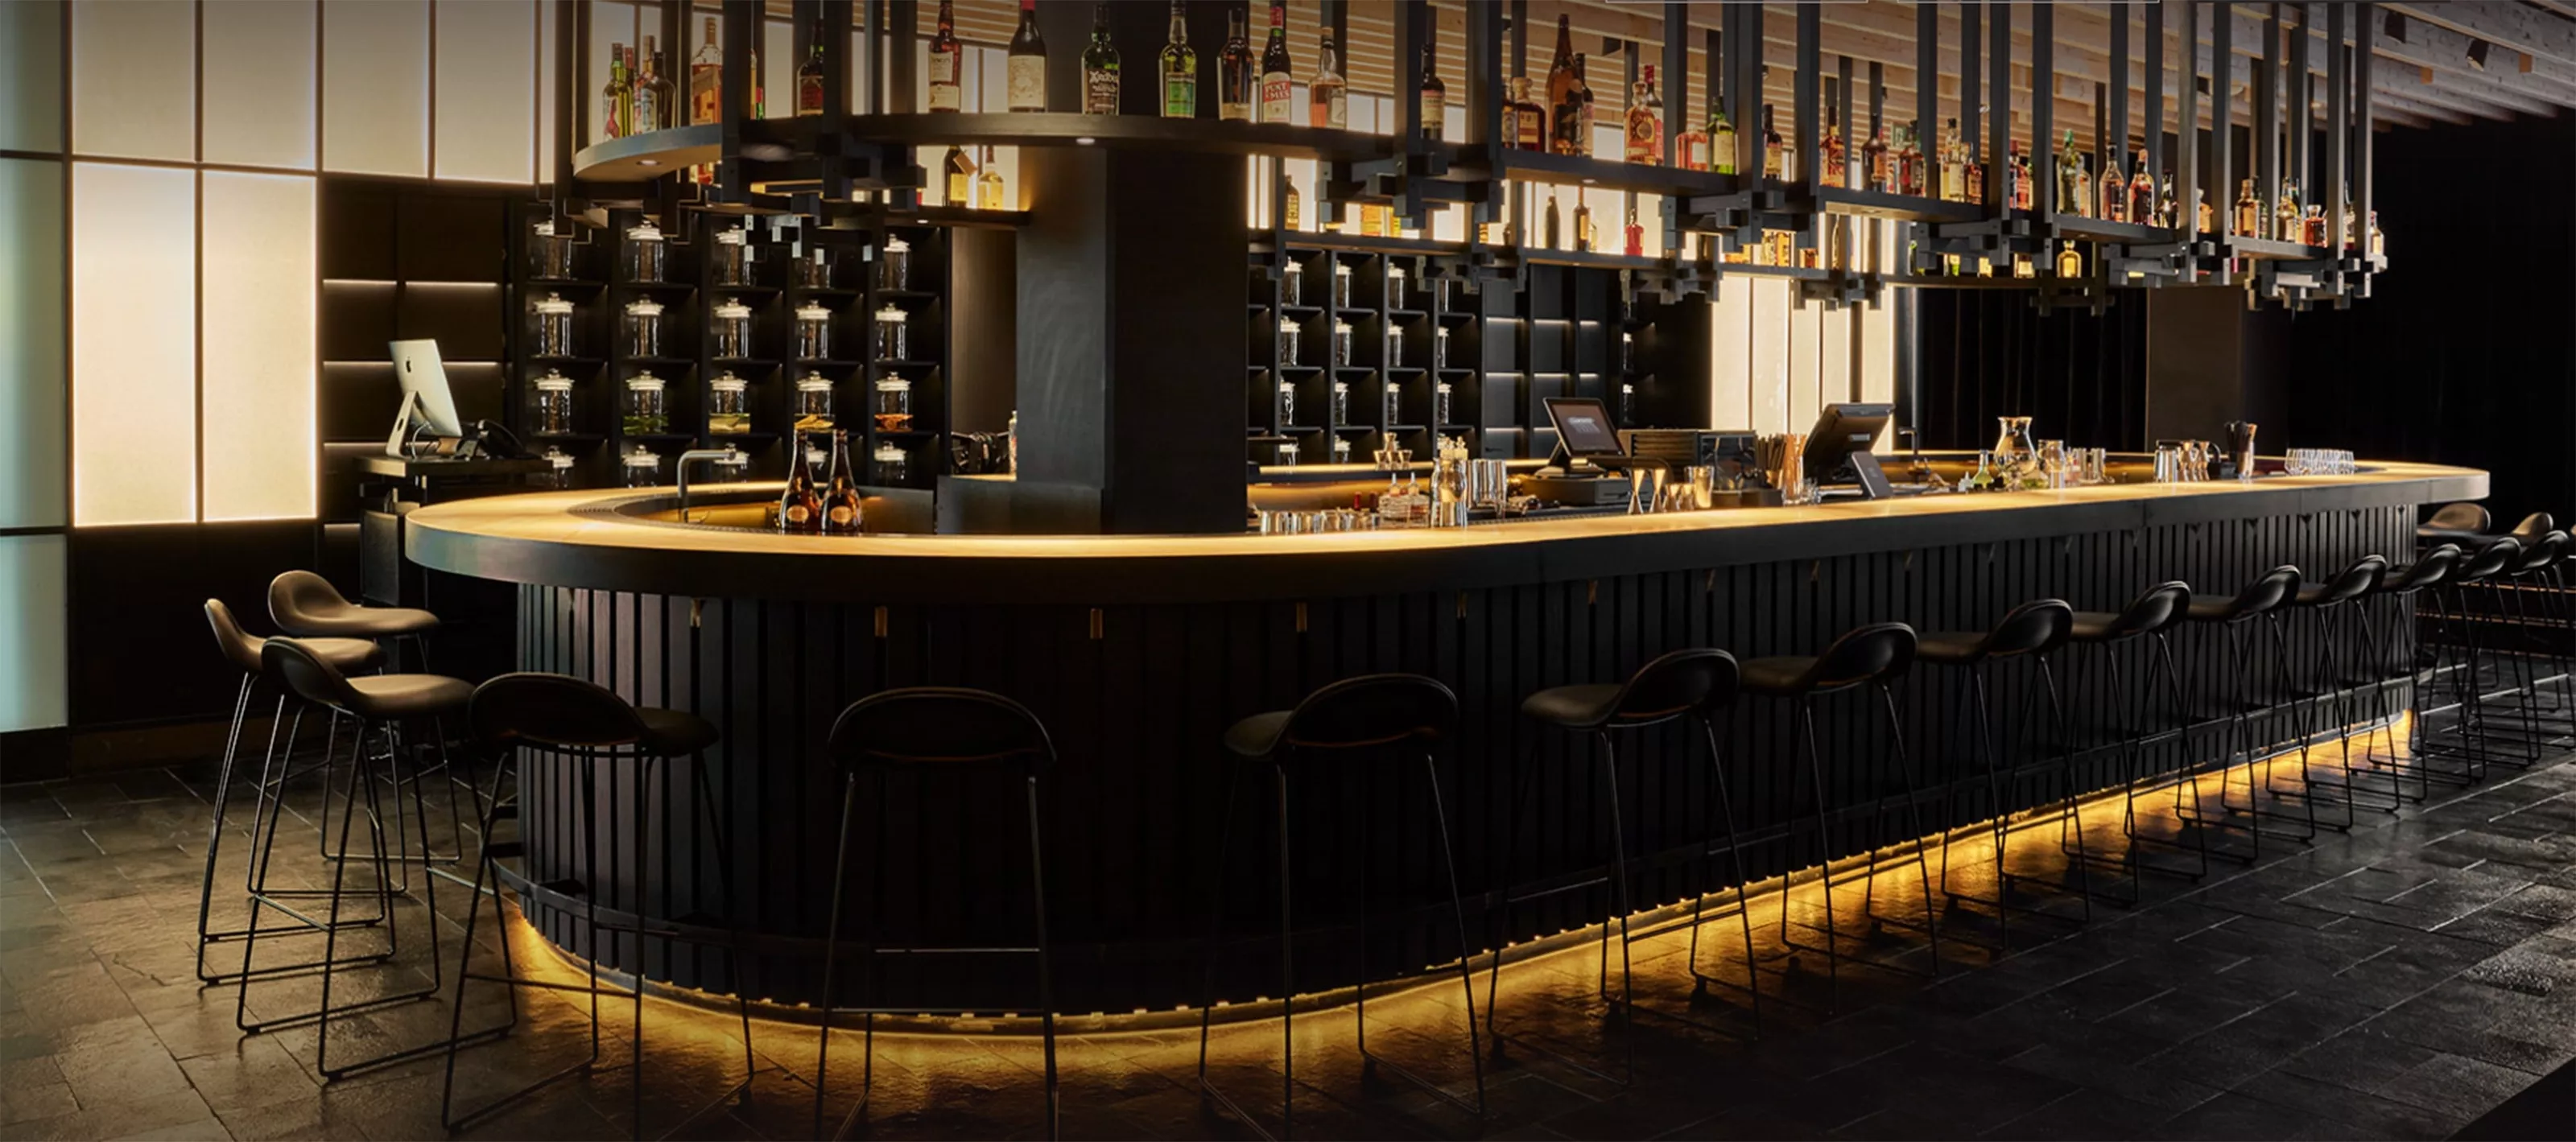 Saatlen Pub in Switzerland, Europe | Pubs & Breweries,Billiards - Rated 0.8